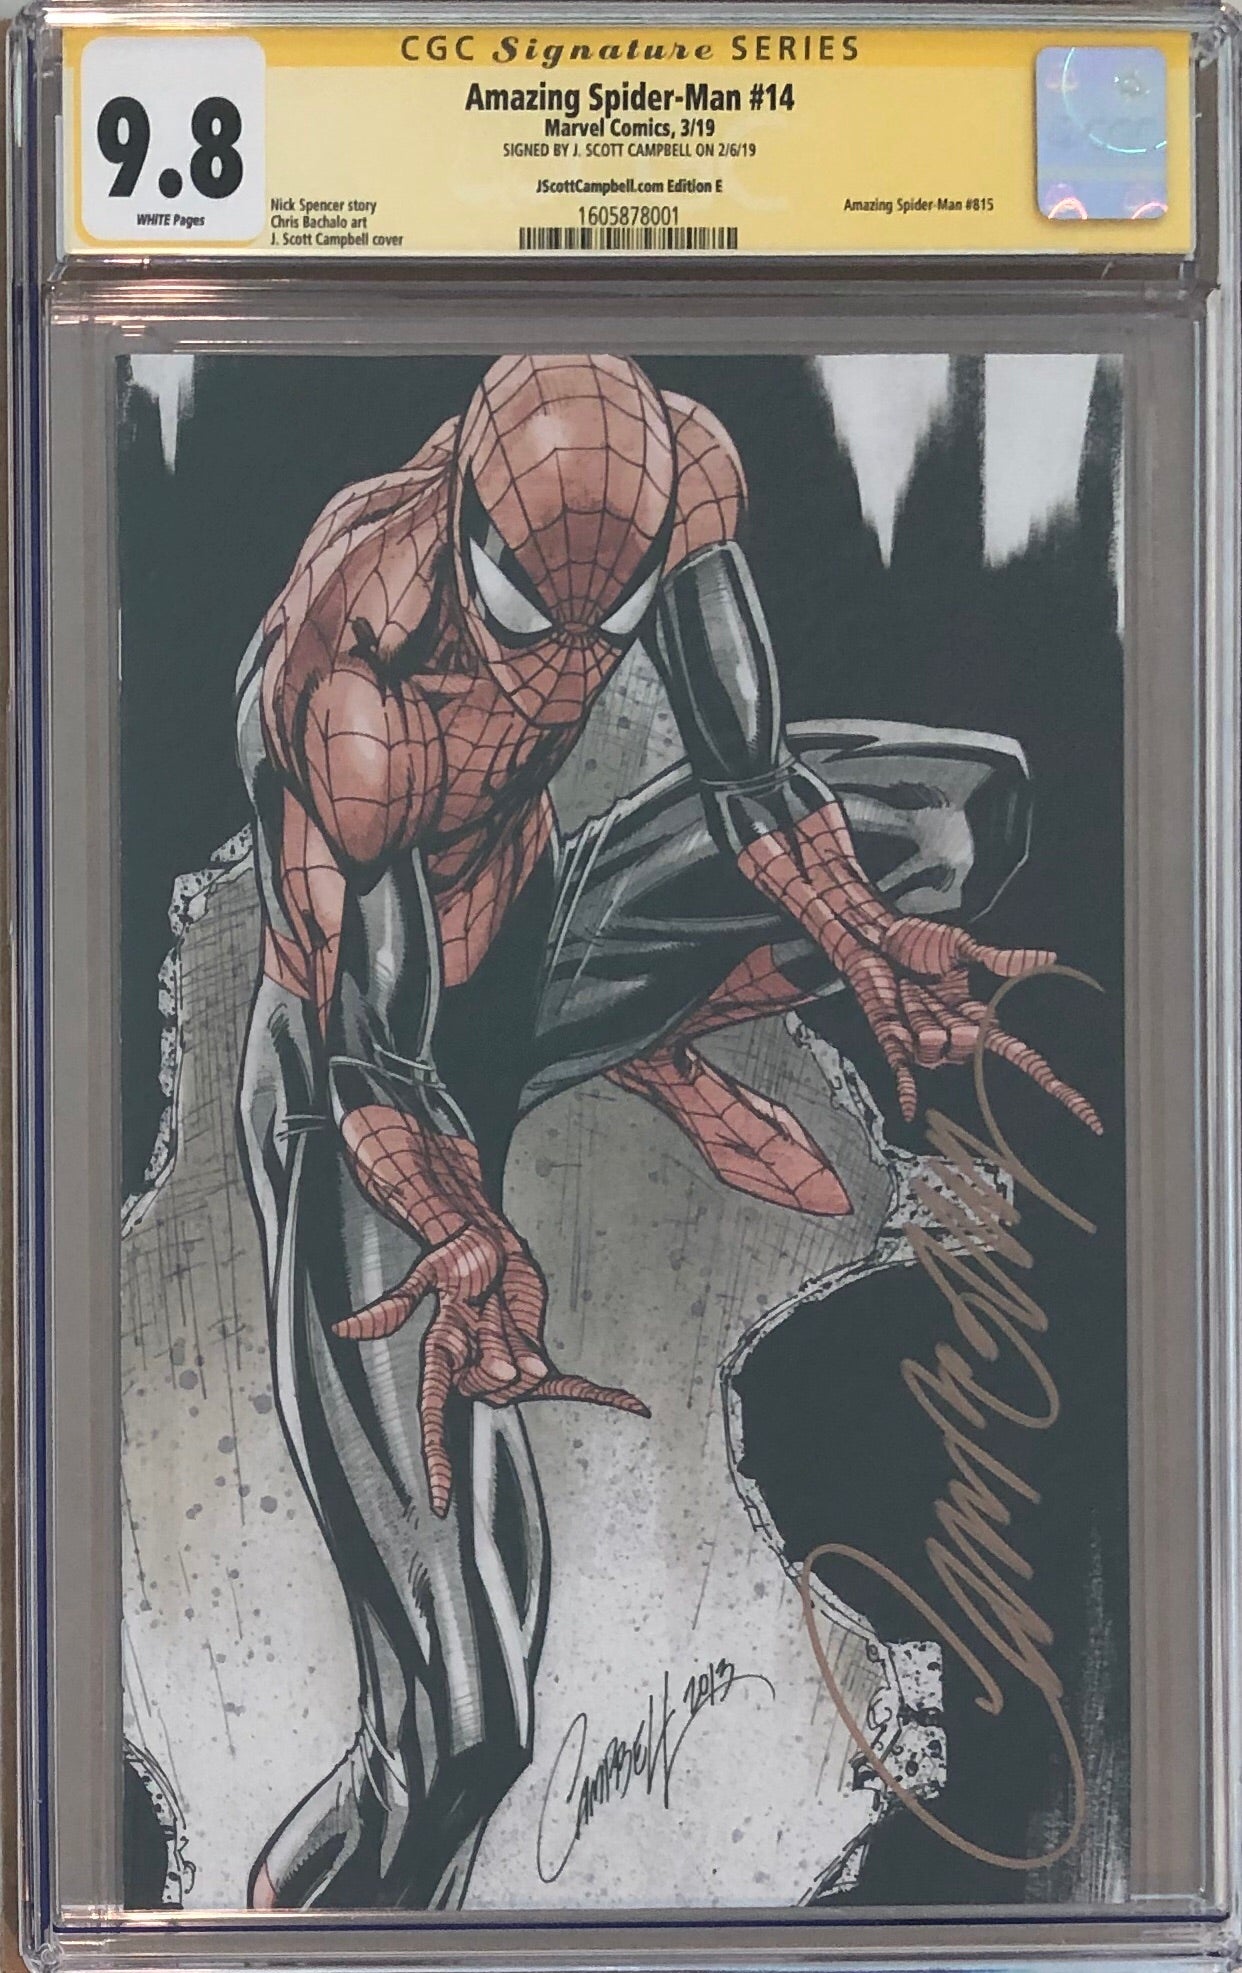 Amazing Spider-Man #14 J. Scott Campbell Edition E "Spider-Man" Virgin Exclusive CGC 9.8 SS